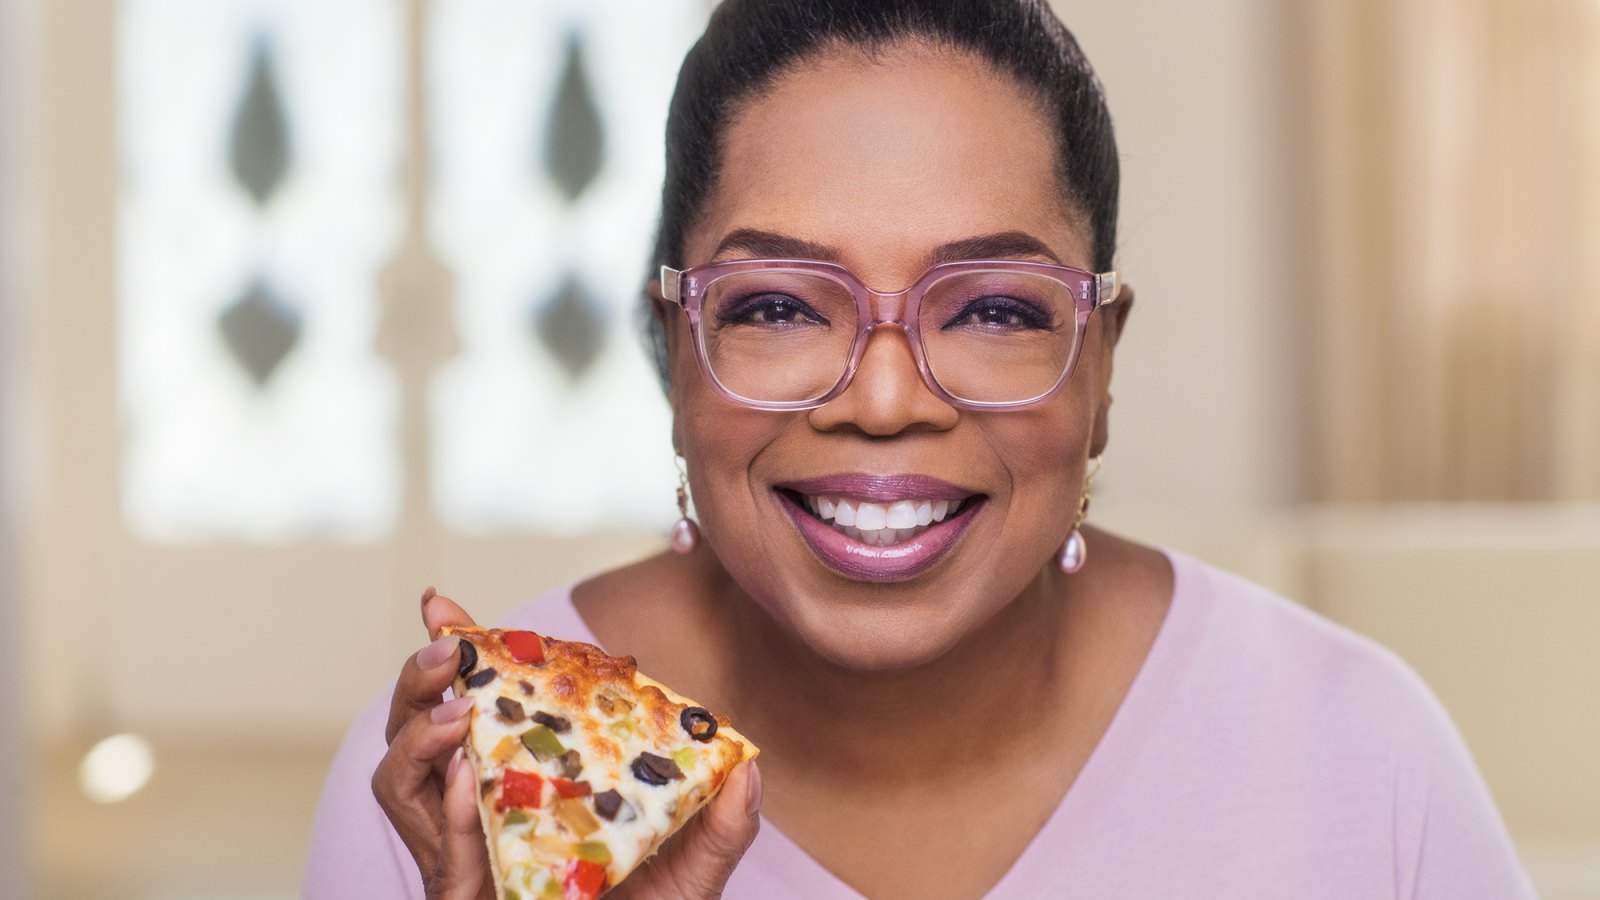 Oprah with her new cauliflower pizza.